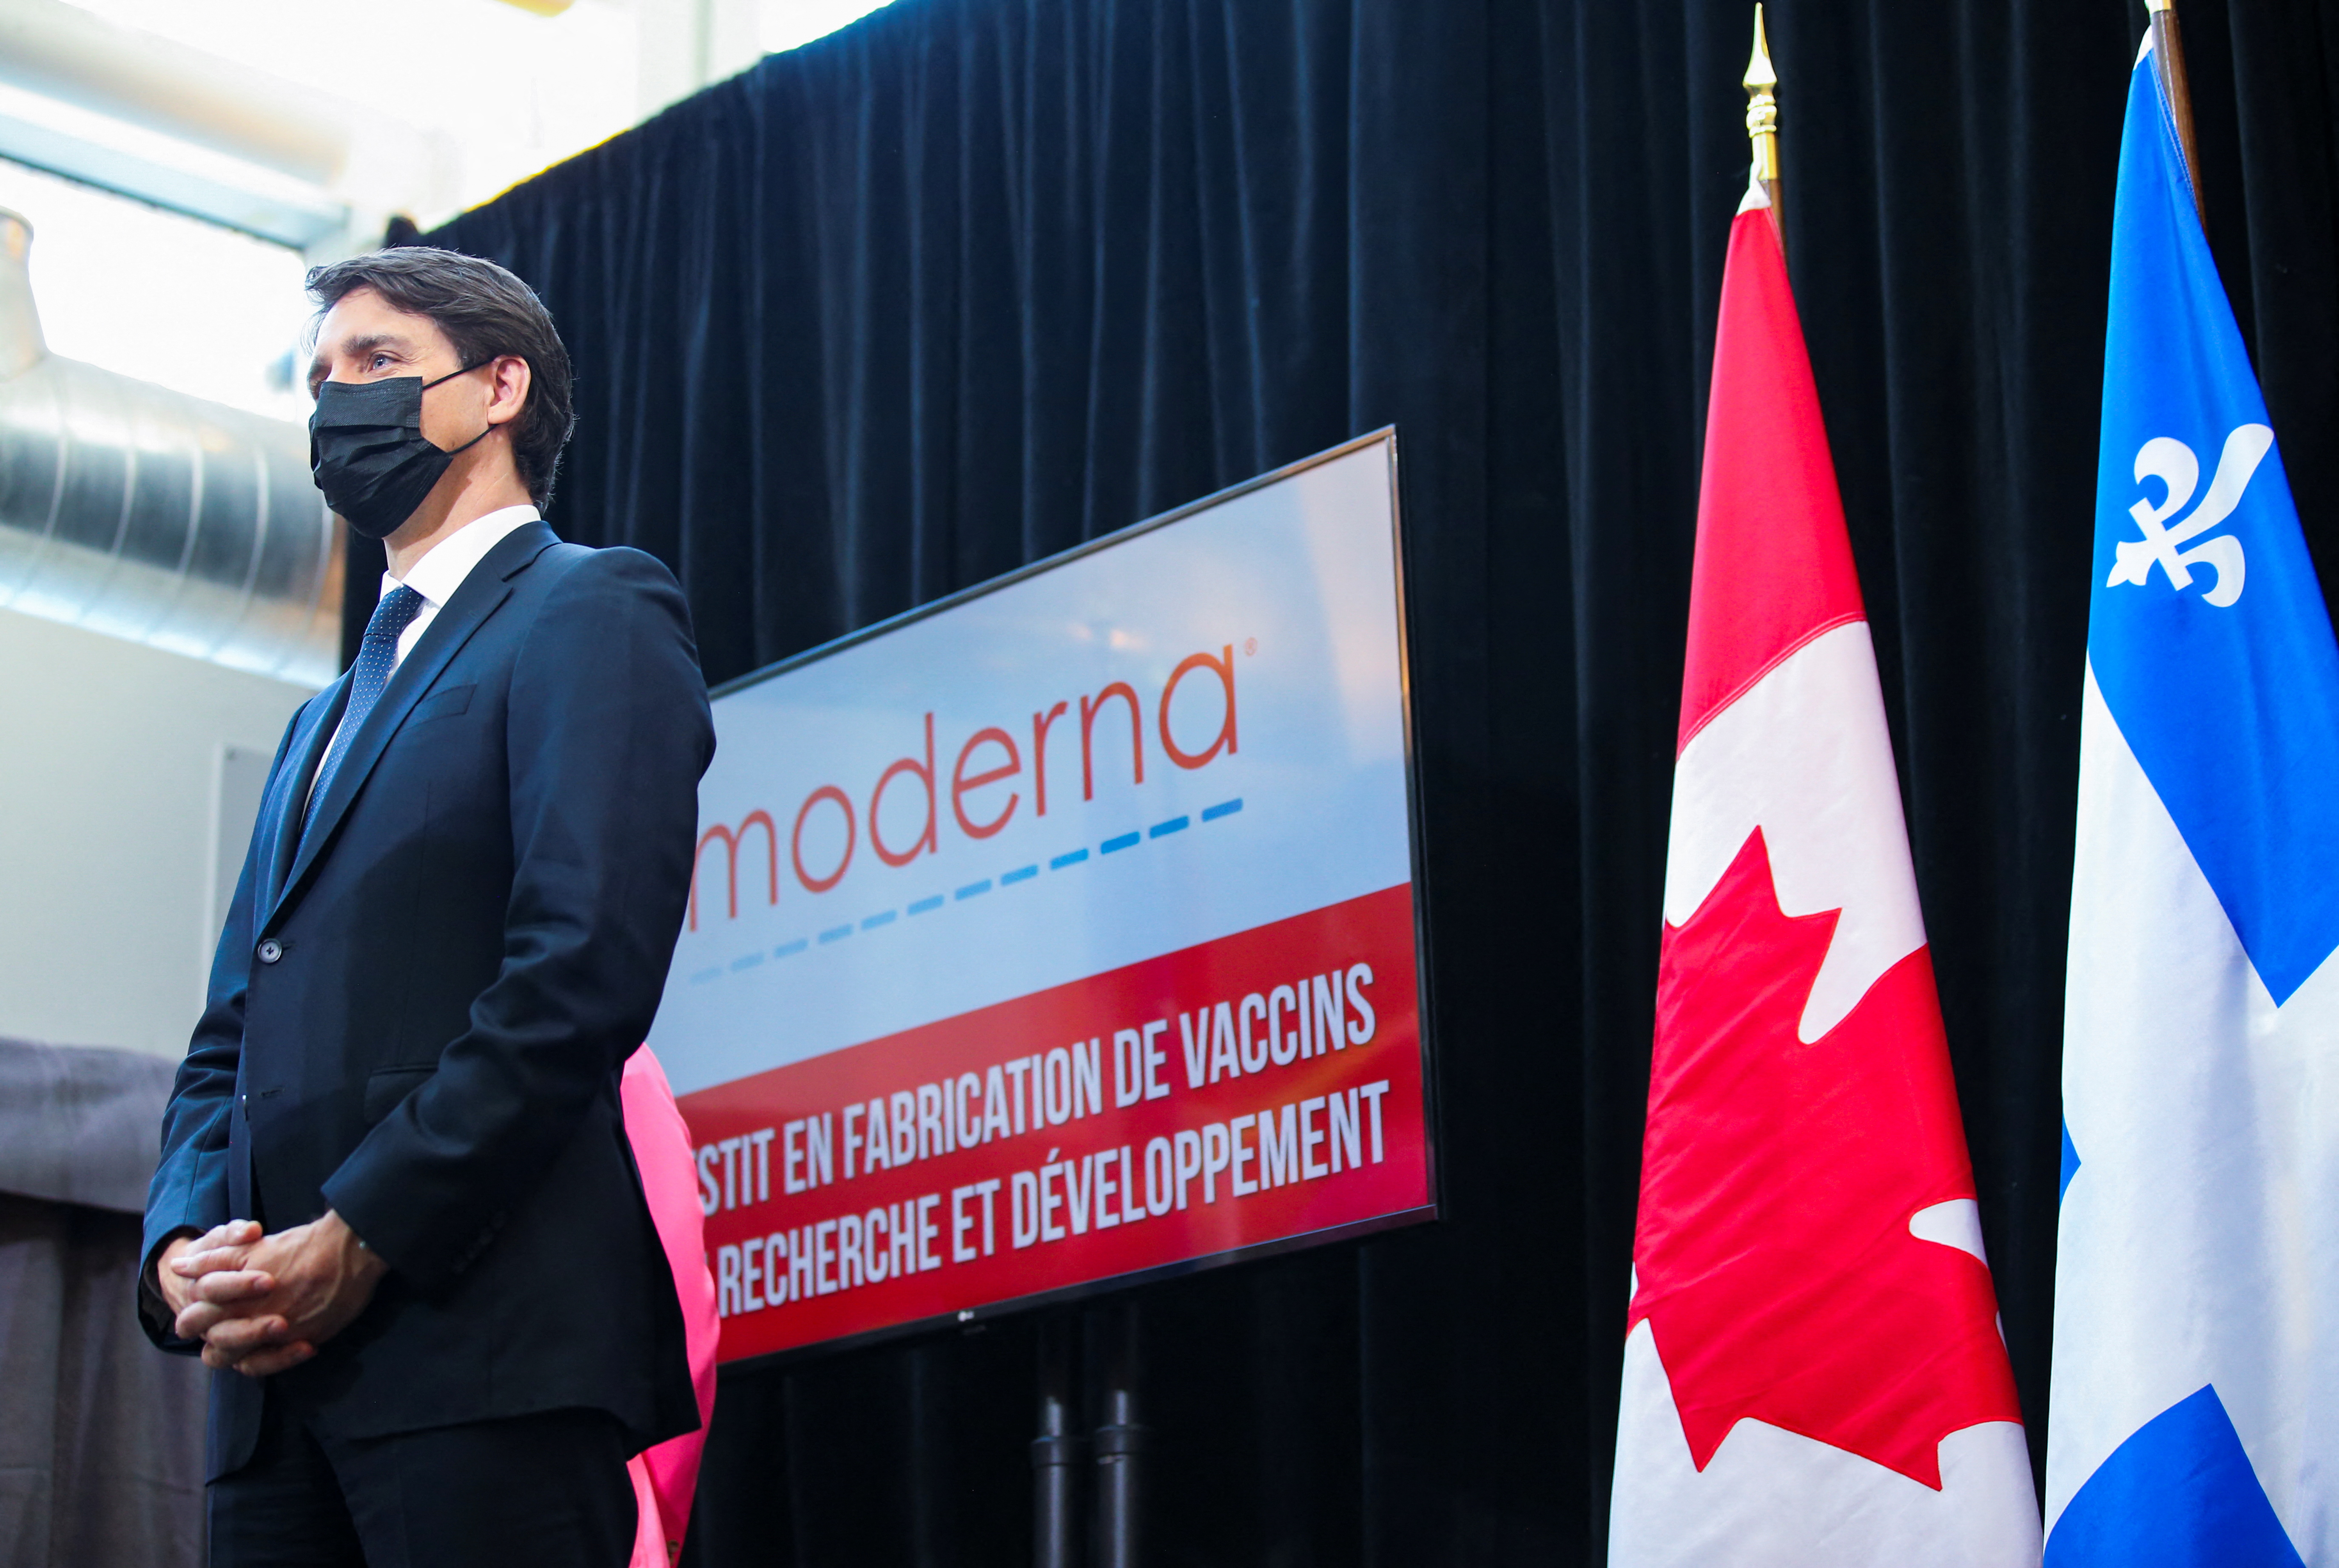 Canada removes vaccine mandate effective October 1